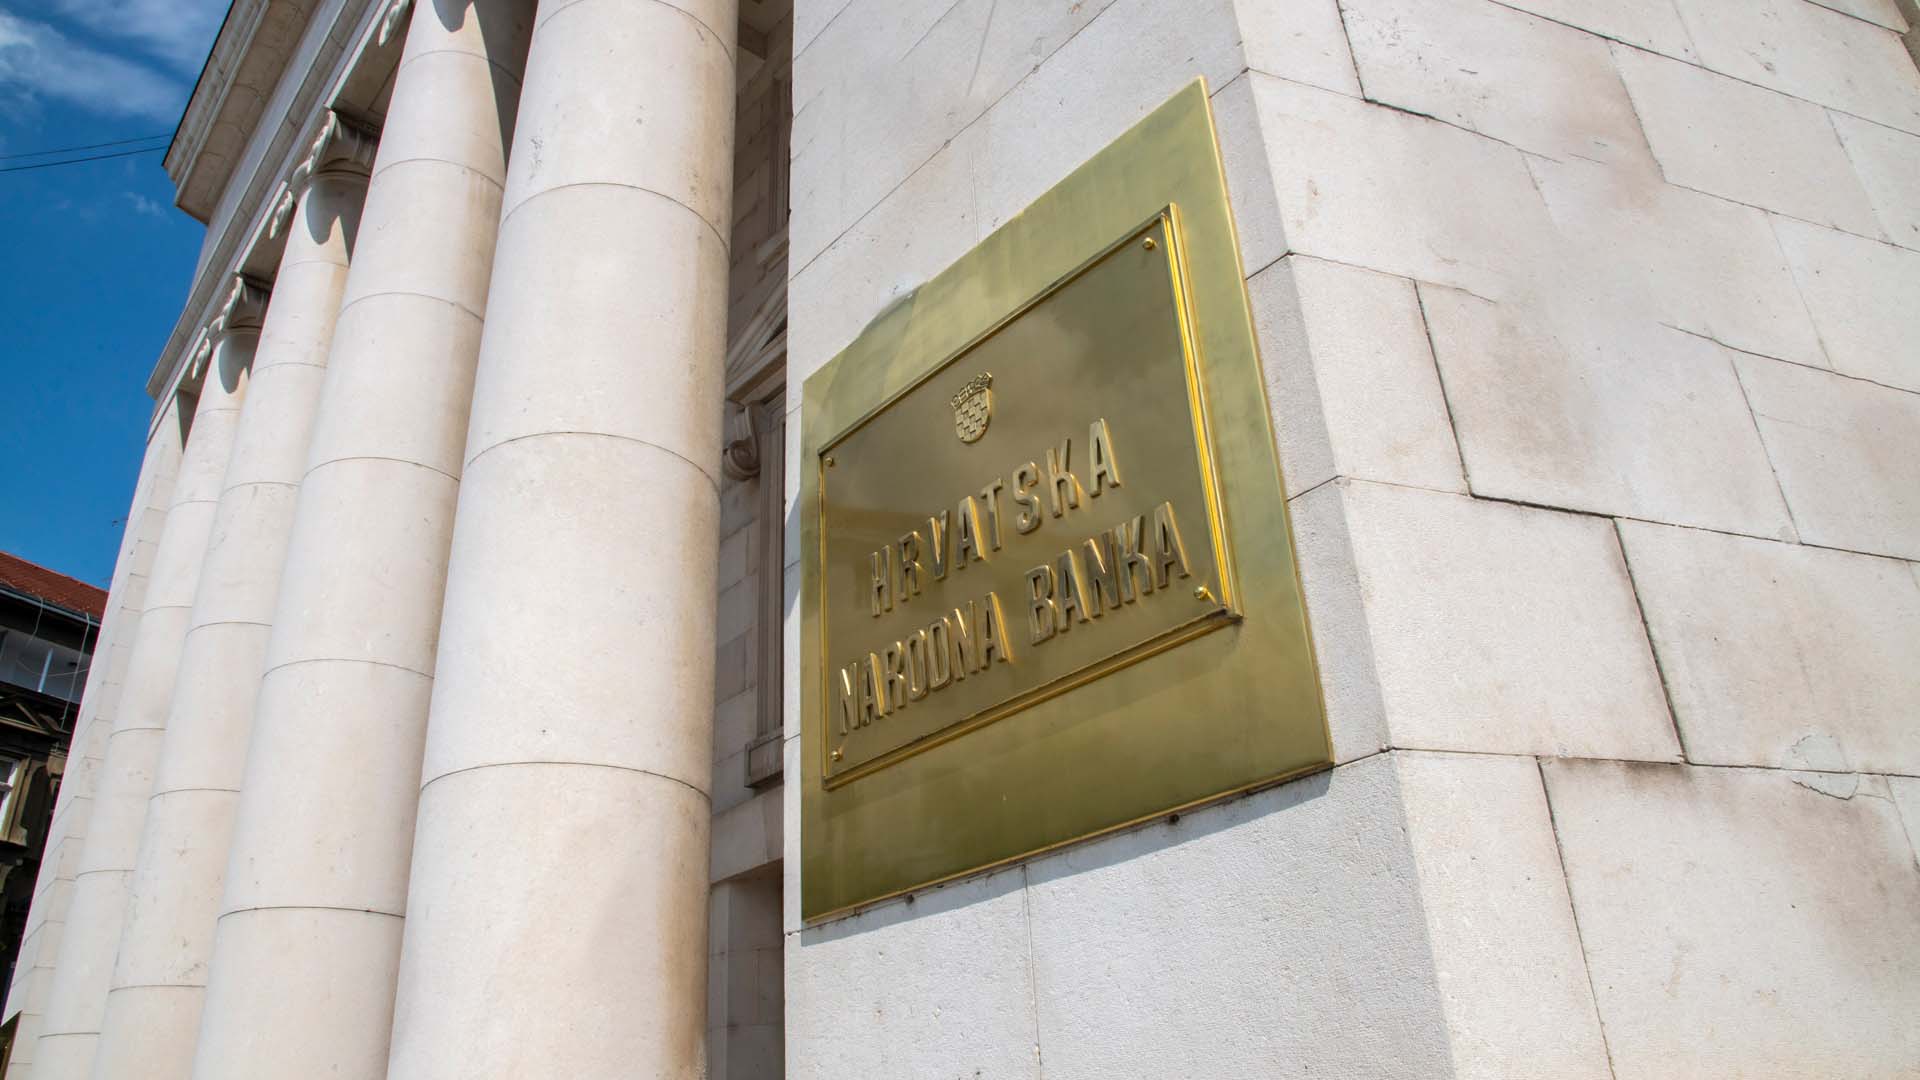 Resolution of Sberbank d.d. – new owner Hrvatska poštanska banka d.d.